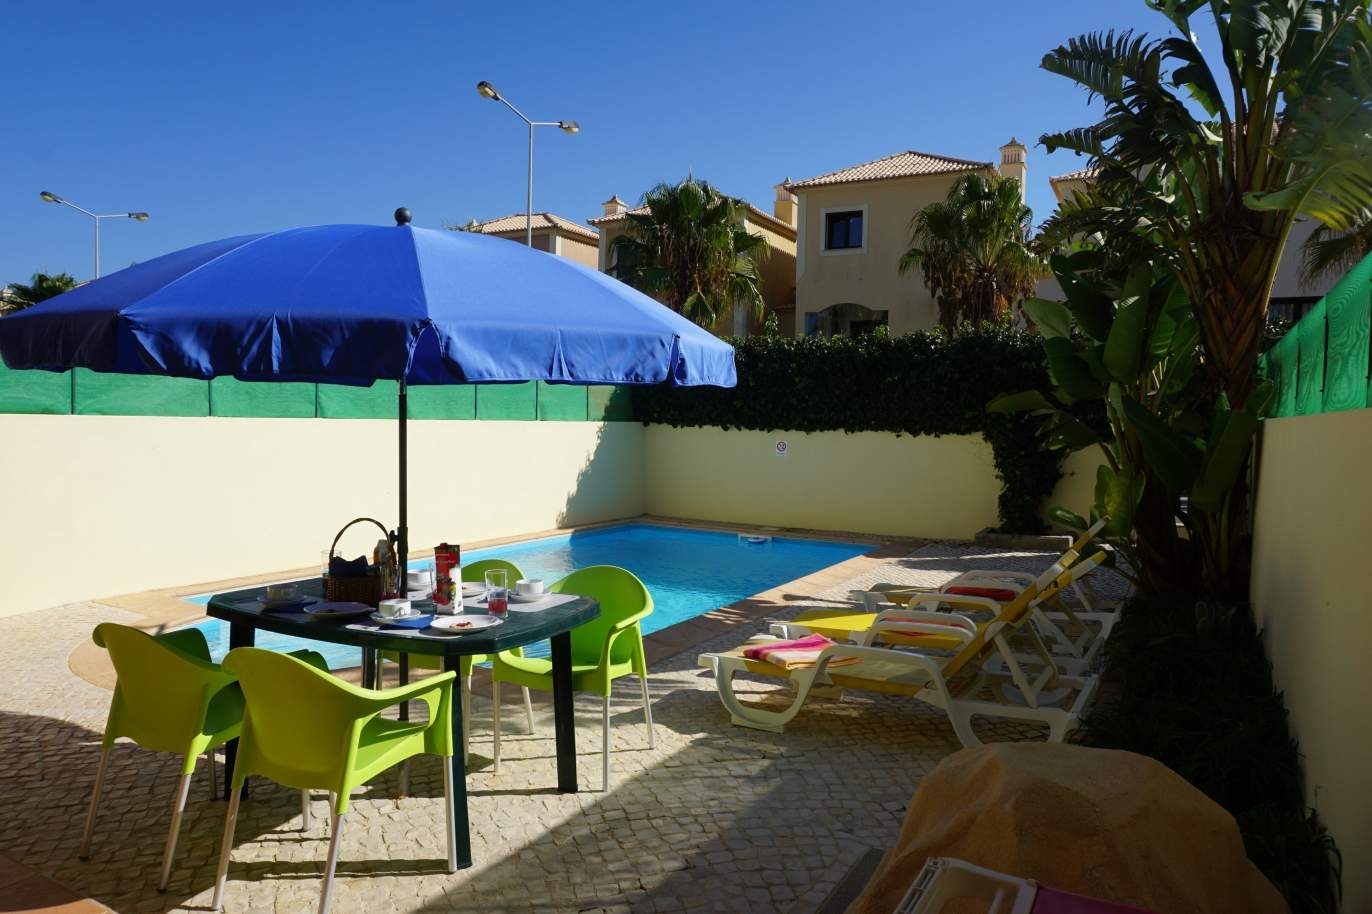 Venda de moradia com piscina em Budens, Vila do Bispo, Algarve_117782